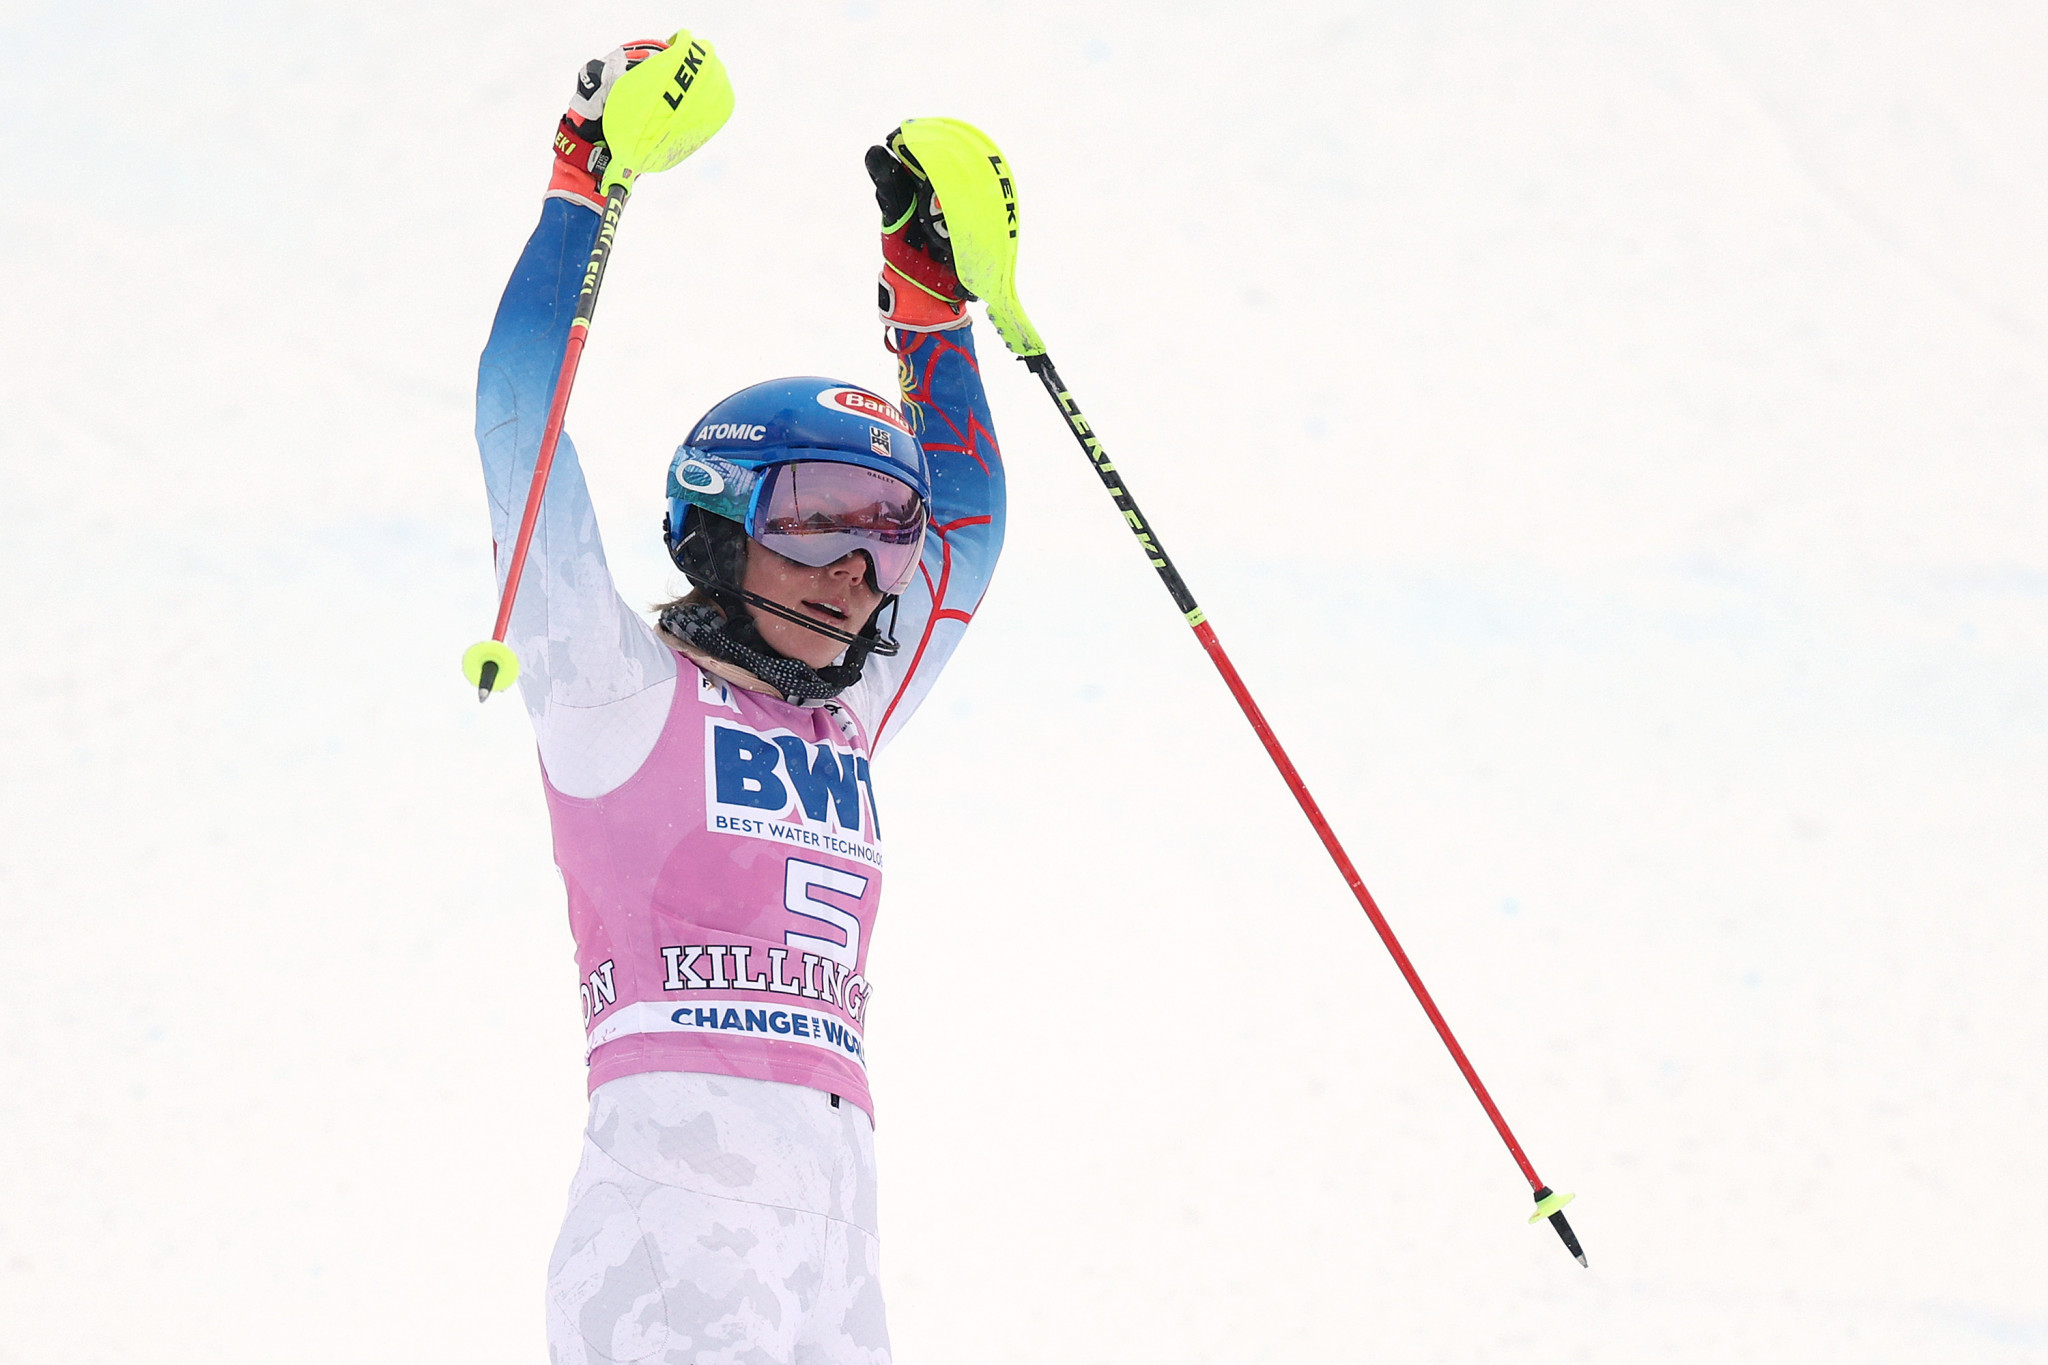 Mikaela Shiffrin overcame Petra Vlhová today to win at the Killington slalom ©Getty Images